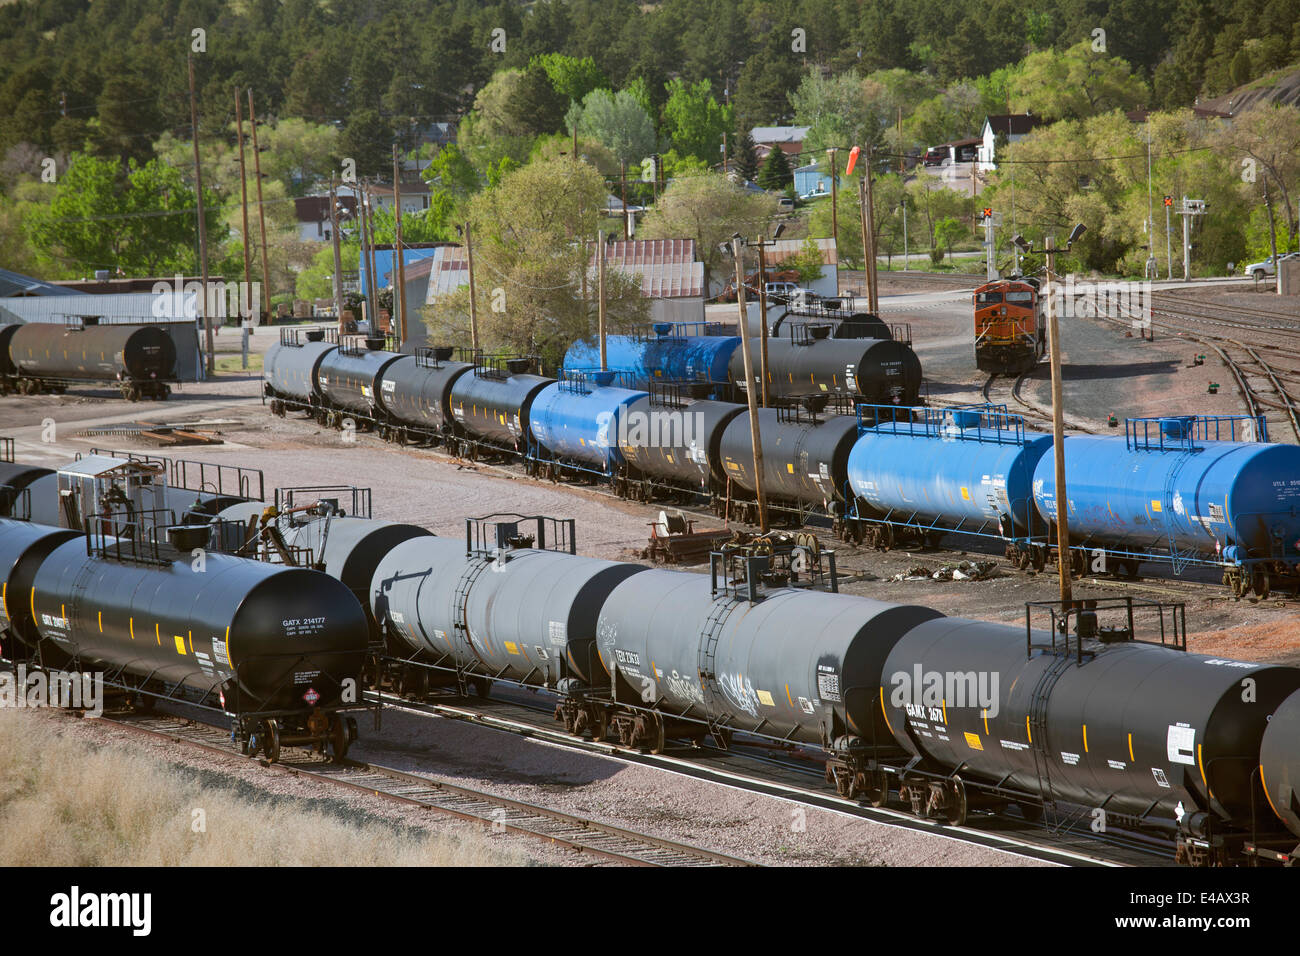 Newcastle, Wyoming - Petroleum tank cars at the BNSF Railway yard. Stock Photo